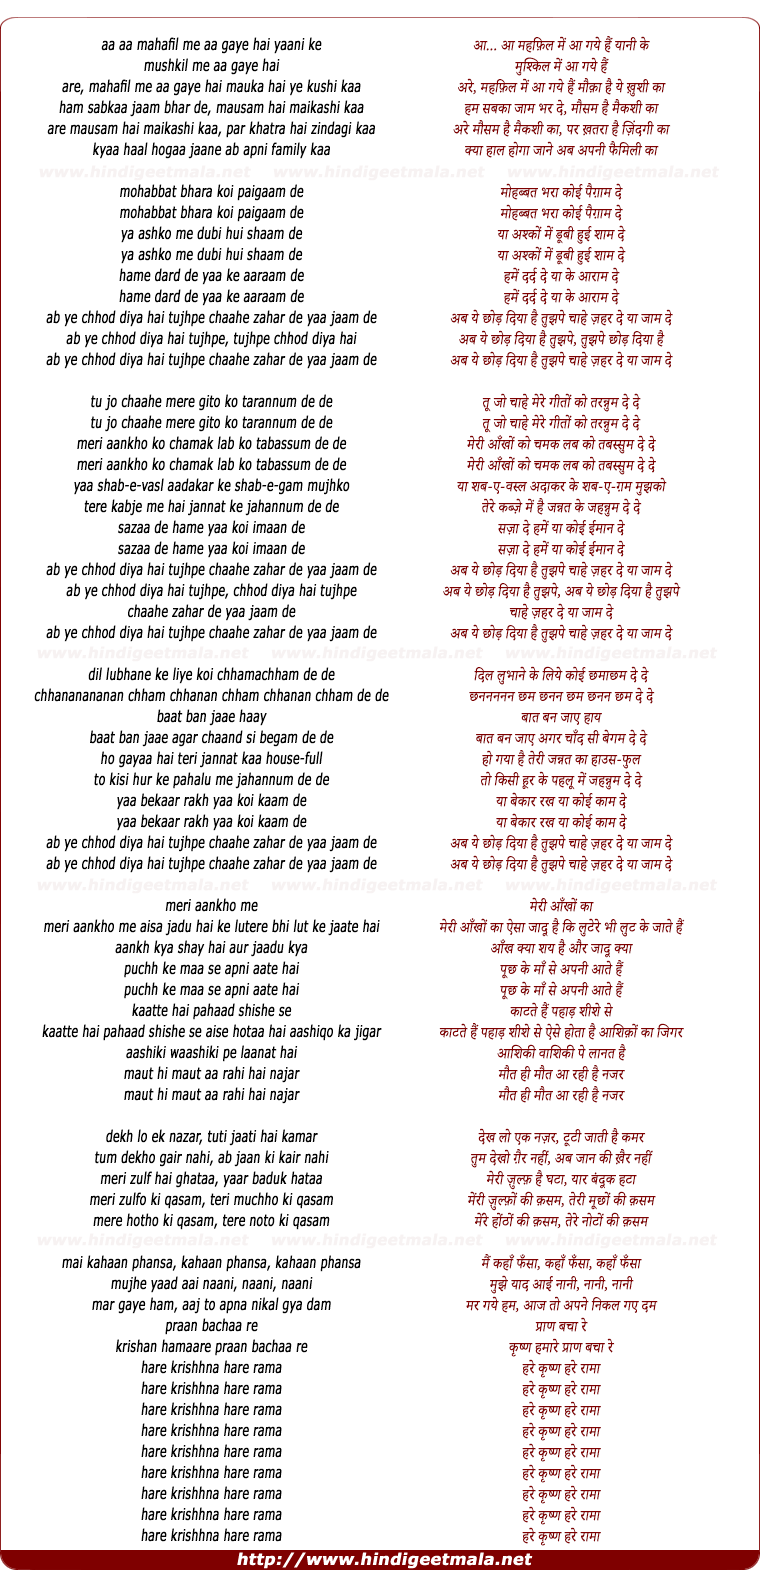 lyrics of song Mohabbat Bharaa Koi Paigaam De Yaa Ashkon Men Dubi Hui Shaam De